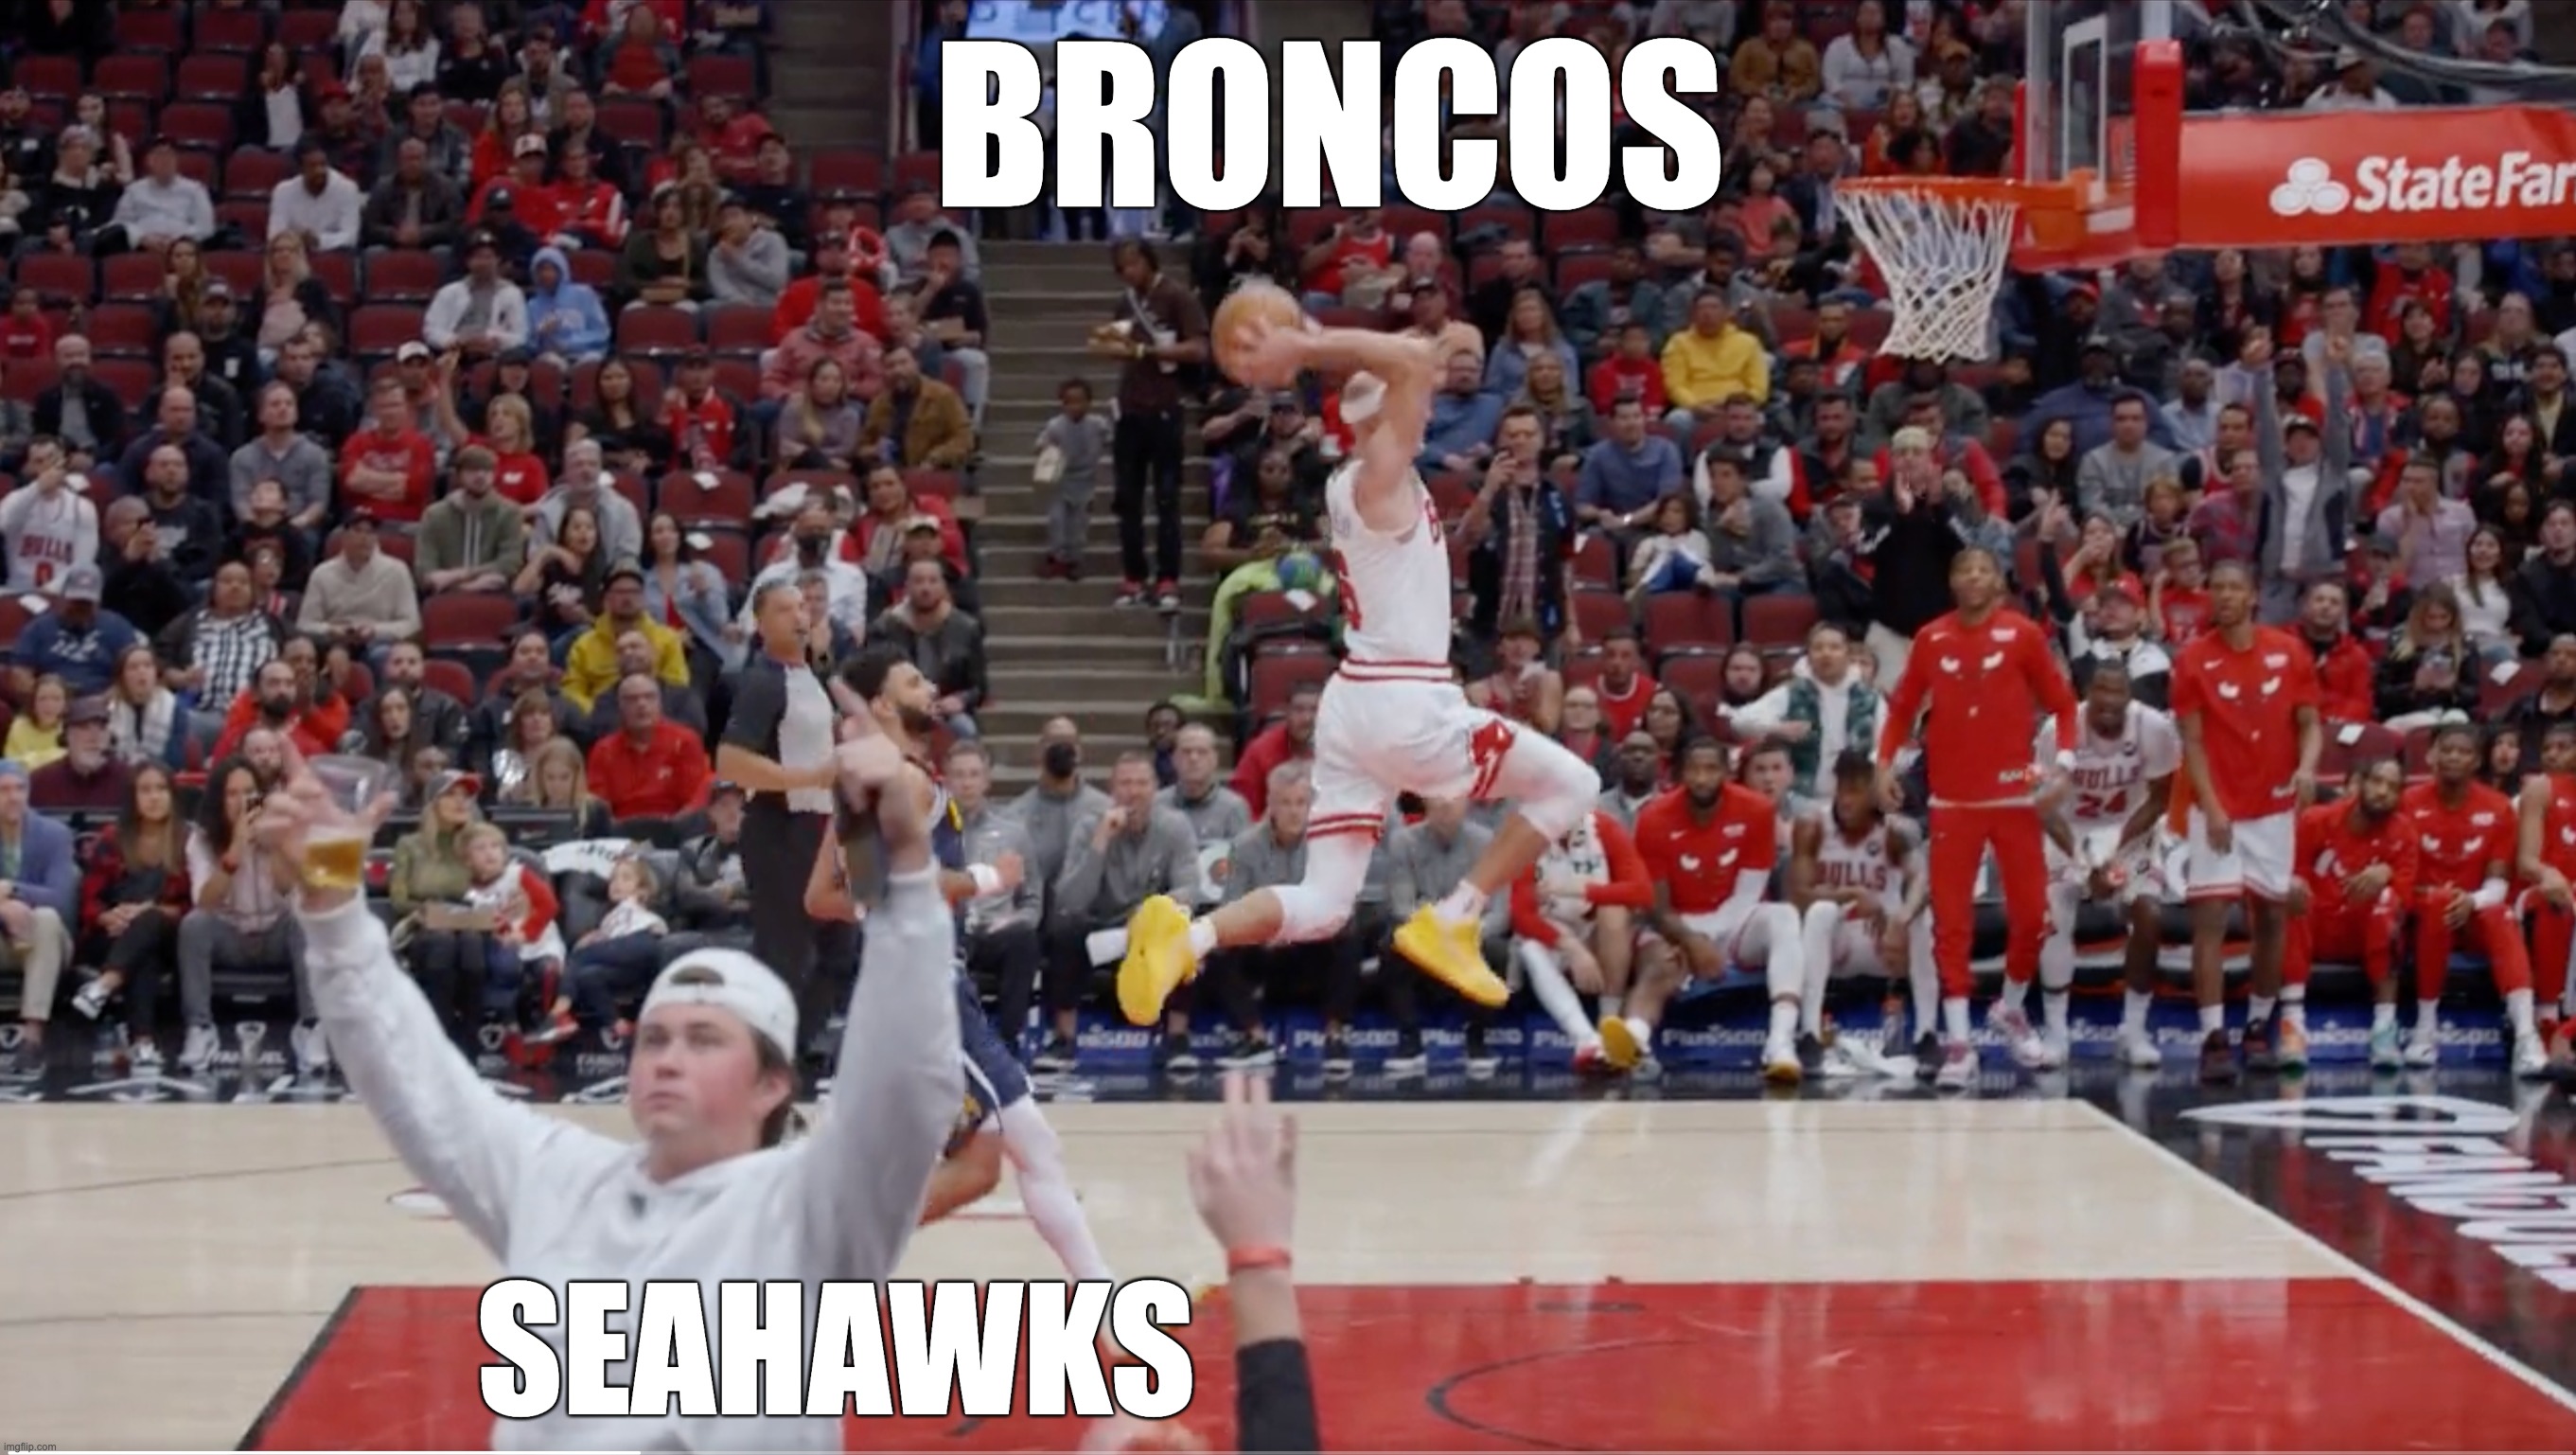 Seahawks vs Broncos | BRONCOS; SEAHAWKS | image tagged in nfl memes | made w/ Imgflip meme maker